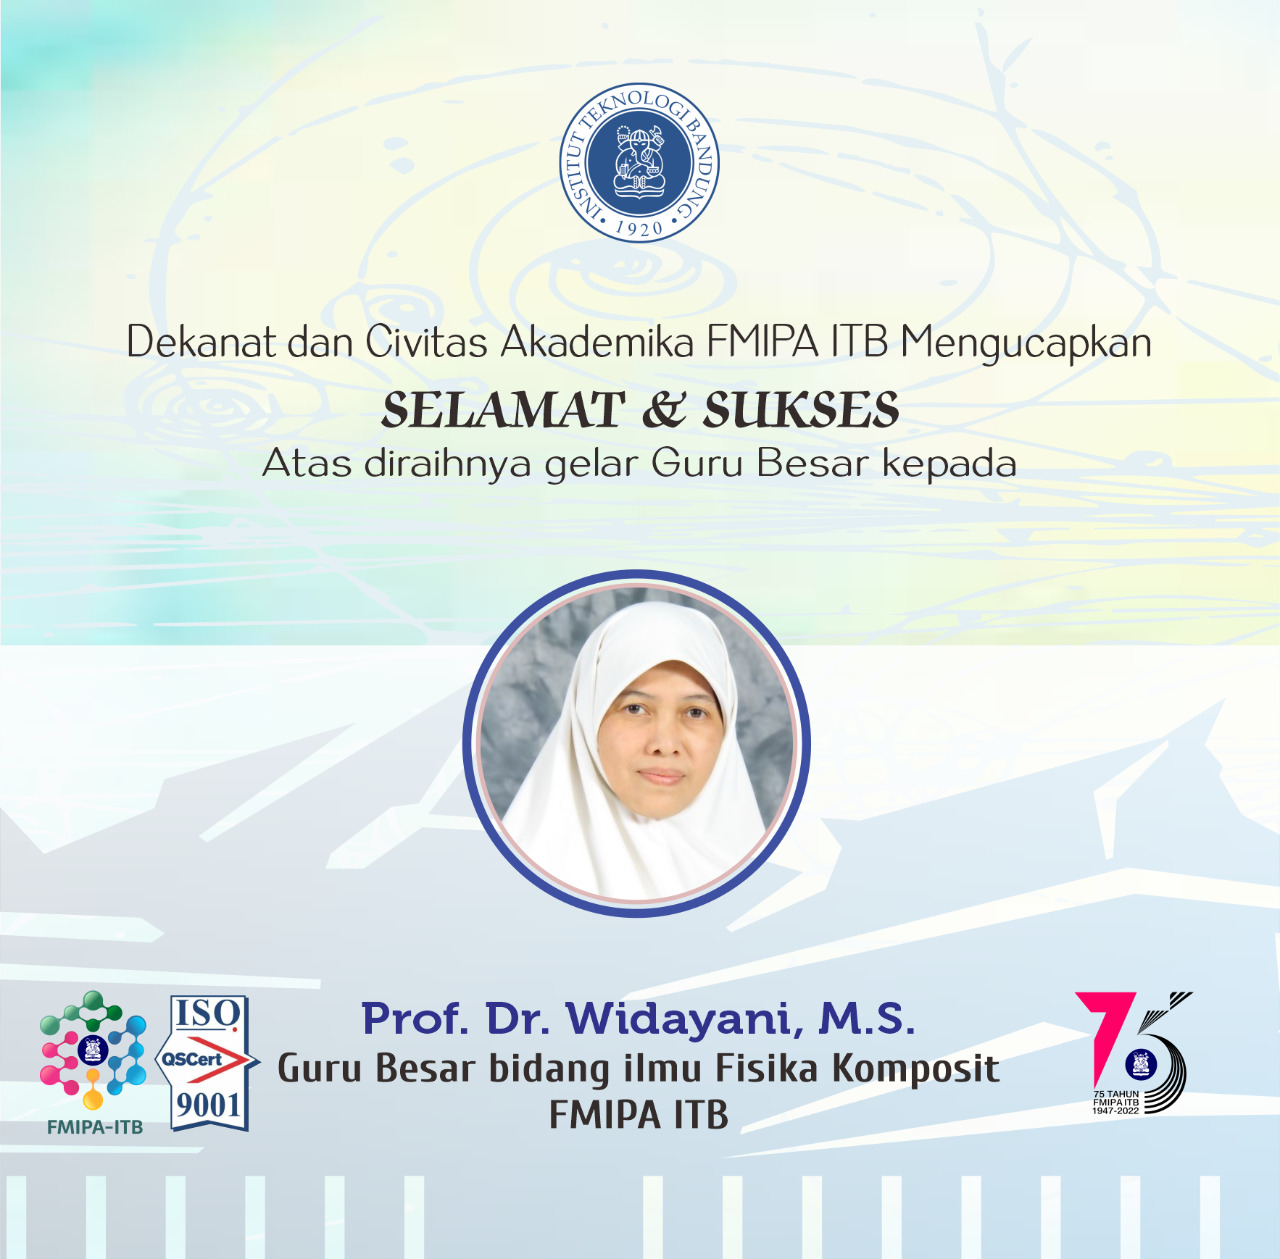 Selamat kepada Prof. Dr. Widayani, MS. sebagai Guru Besar bidang Ilmu Fisika Komposit